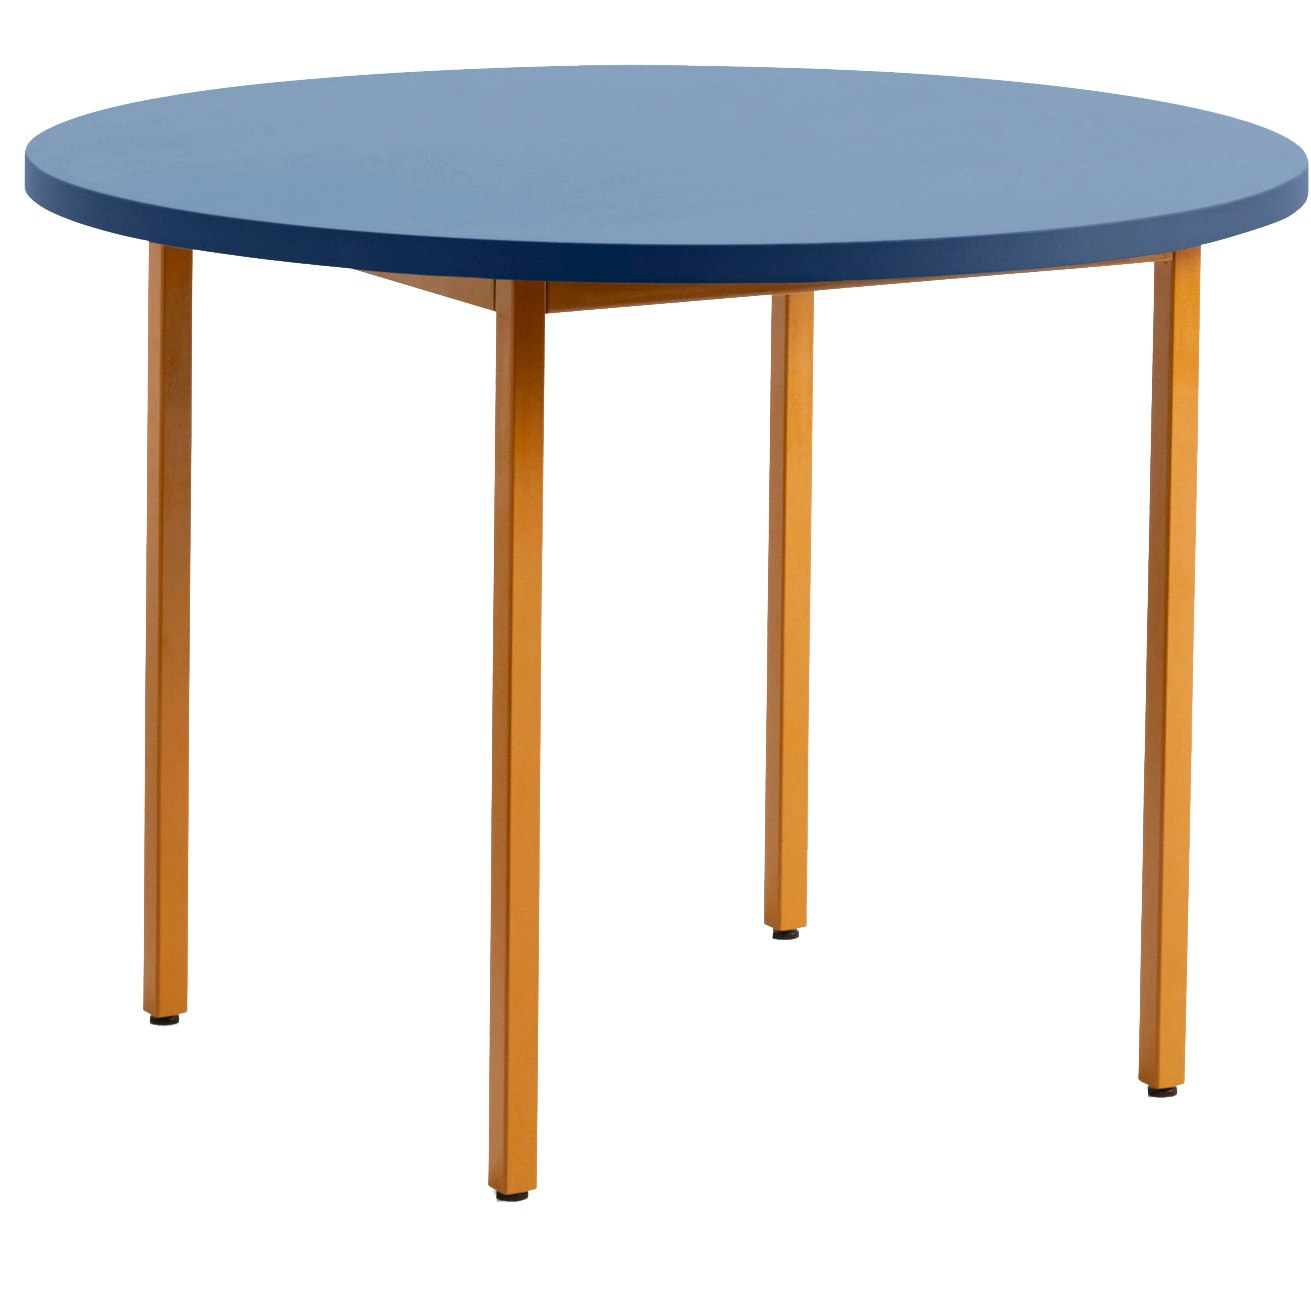 Two-Colour Tisch Ø105 cm, Ocker / Blau